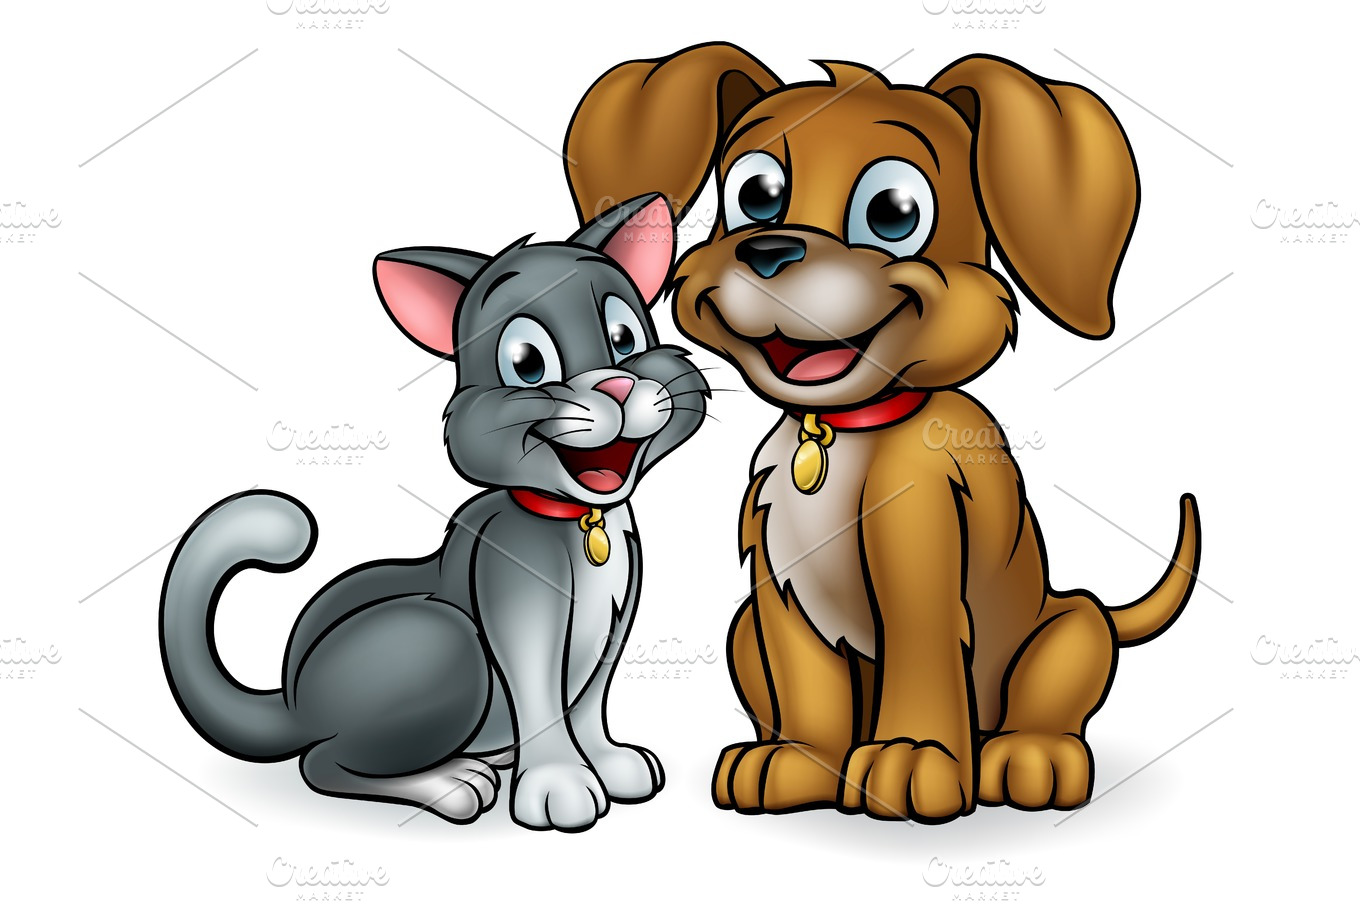 Cat and Dog Pets Cartoon Characters ~ Illustrations ...